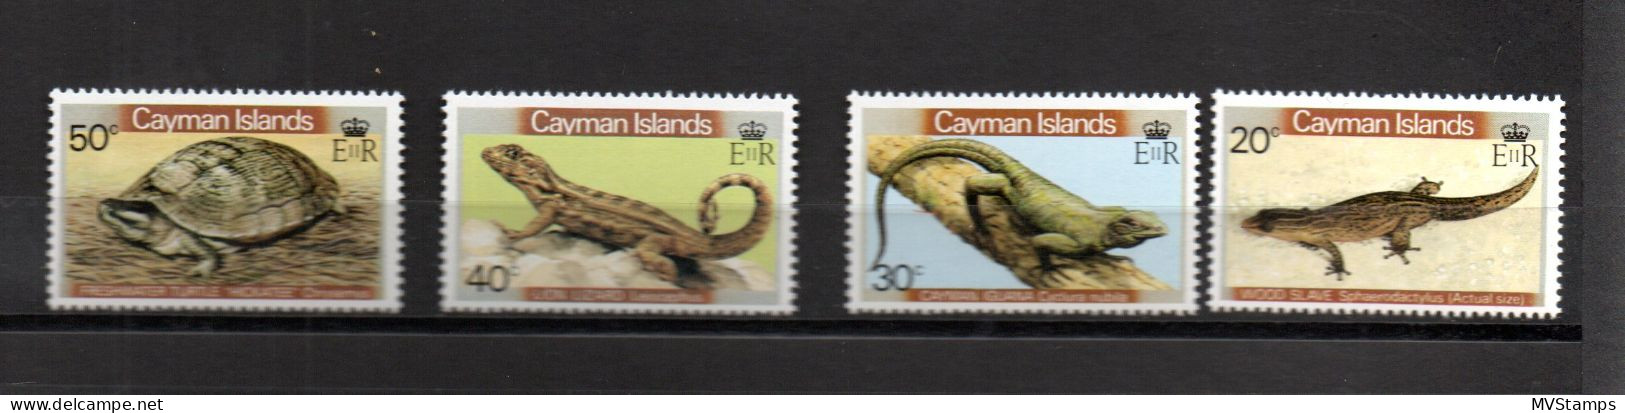 Cayman Islands 1981 Old Set Turtle/lizard Stamps (Michel 471/74) Nice MNH - Cayman Islands